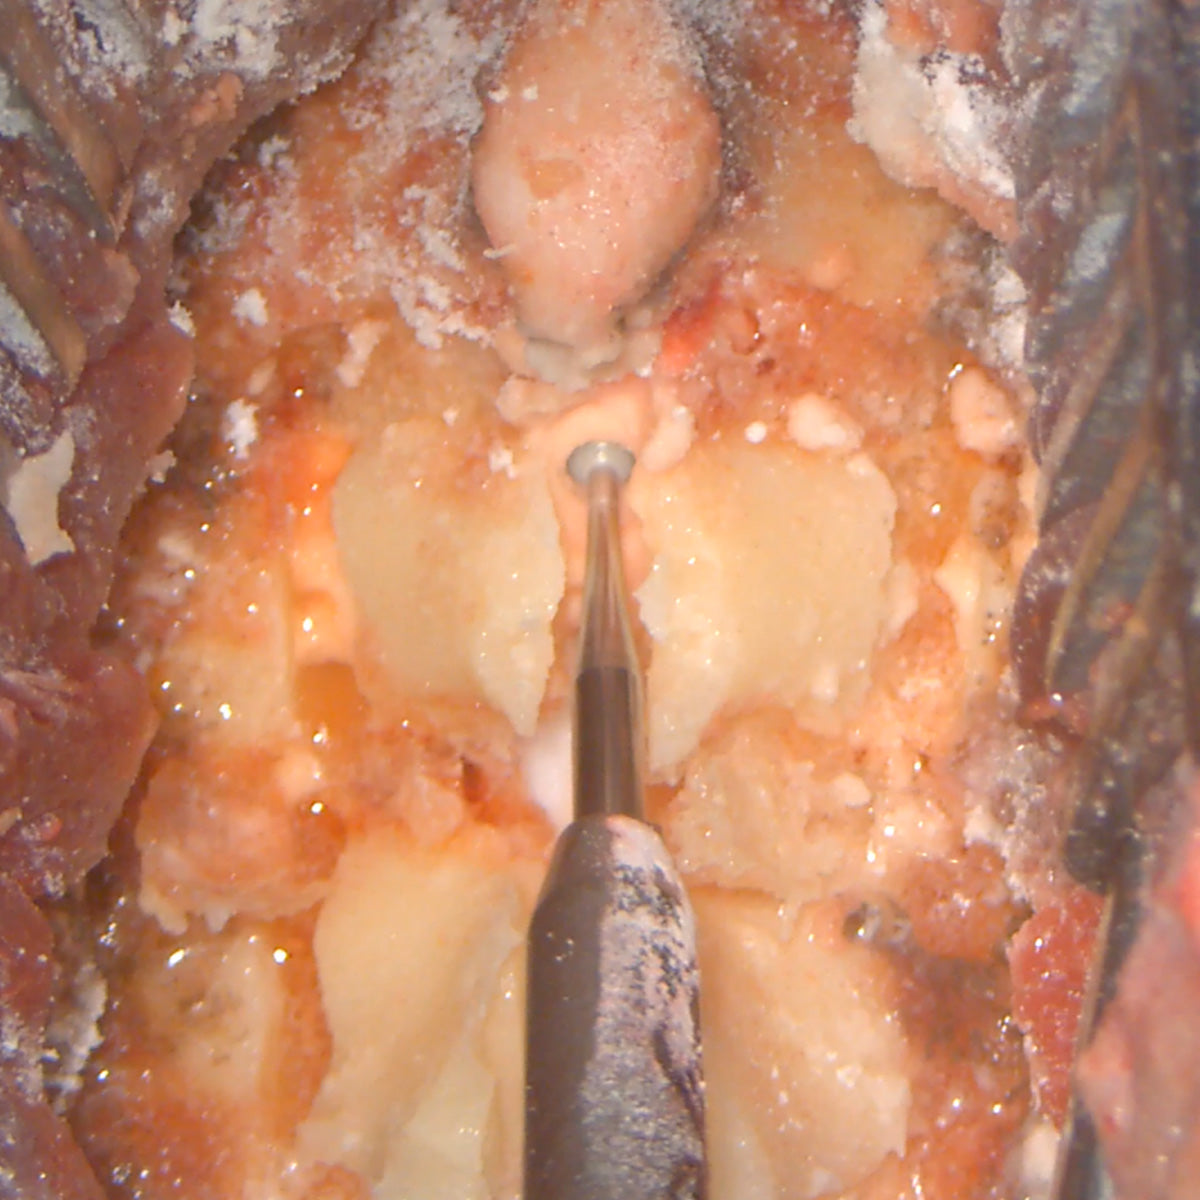 Posterior Cervical Box